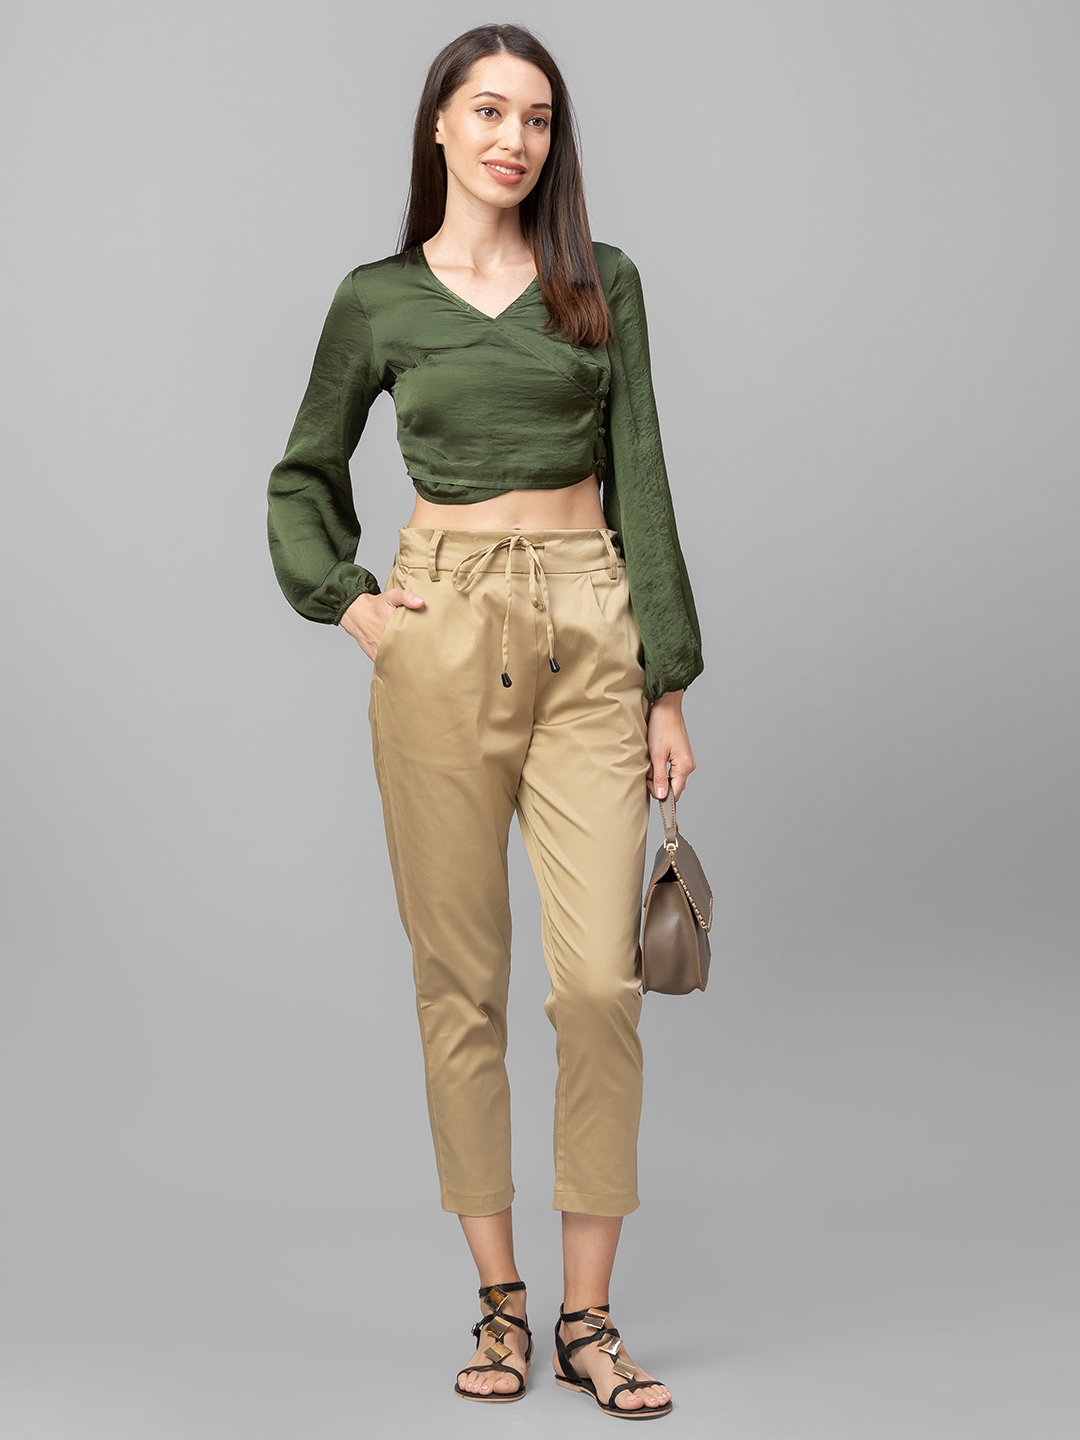 Women's Beige Cotton Solid Trousers